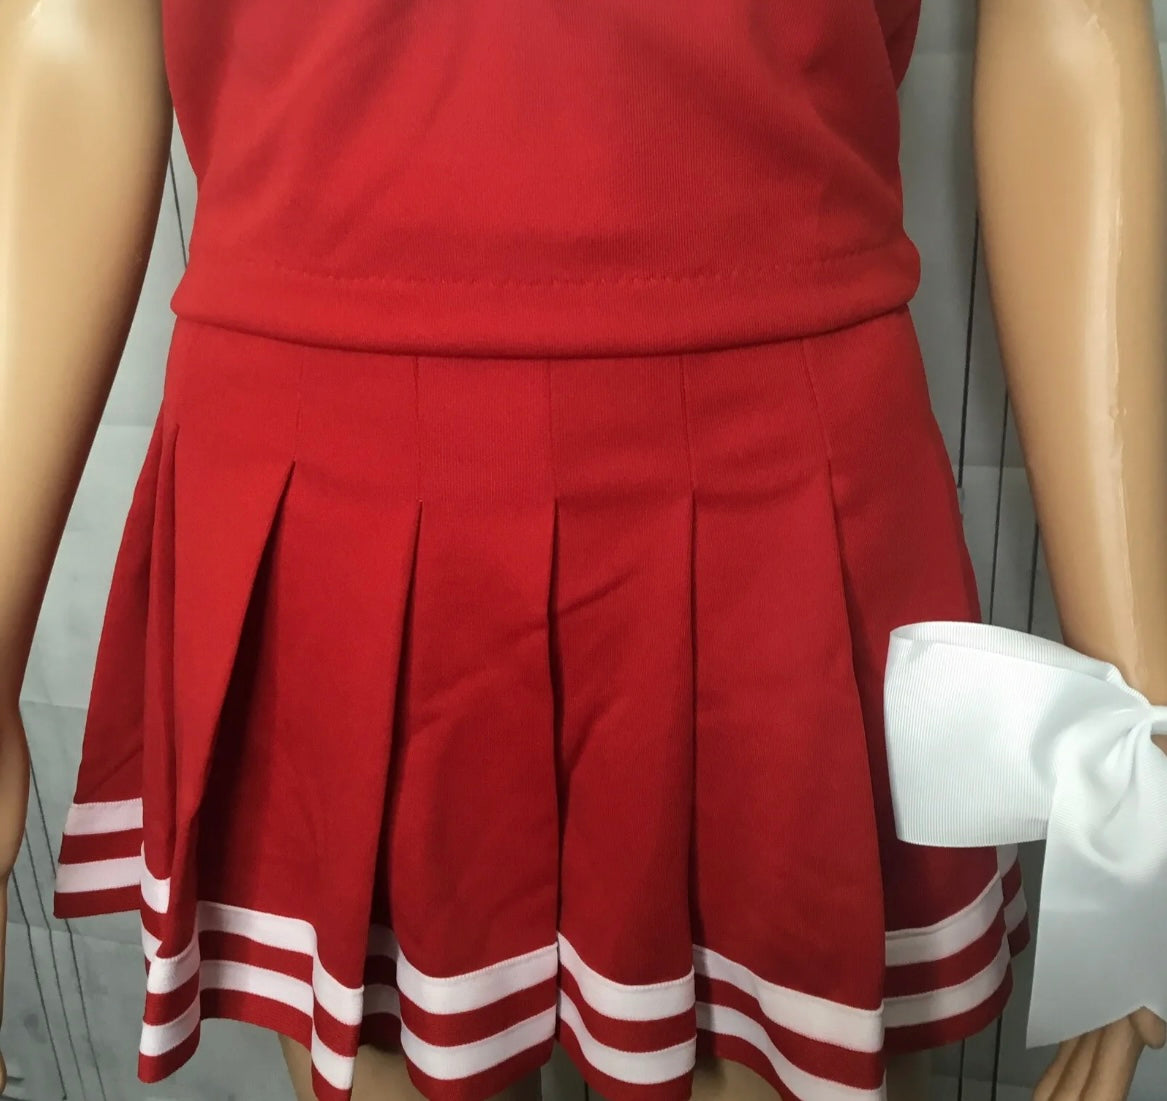 Plain red cheerleading uniform classic